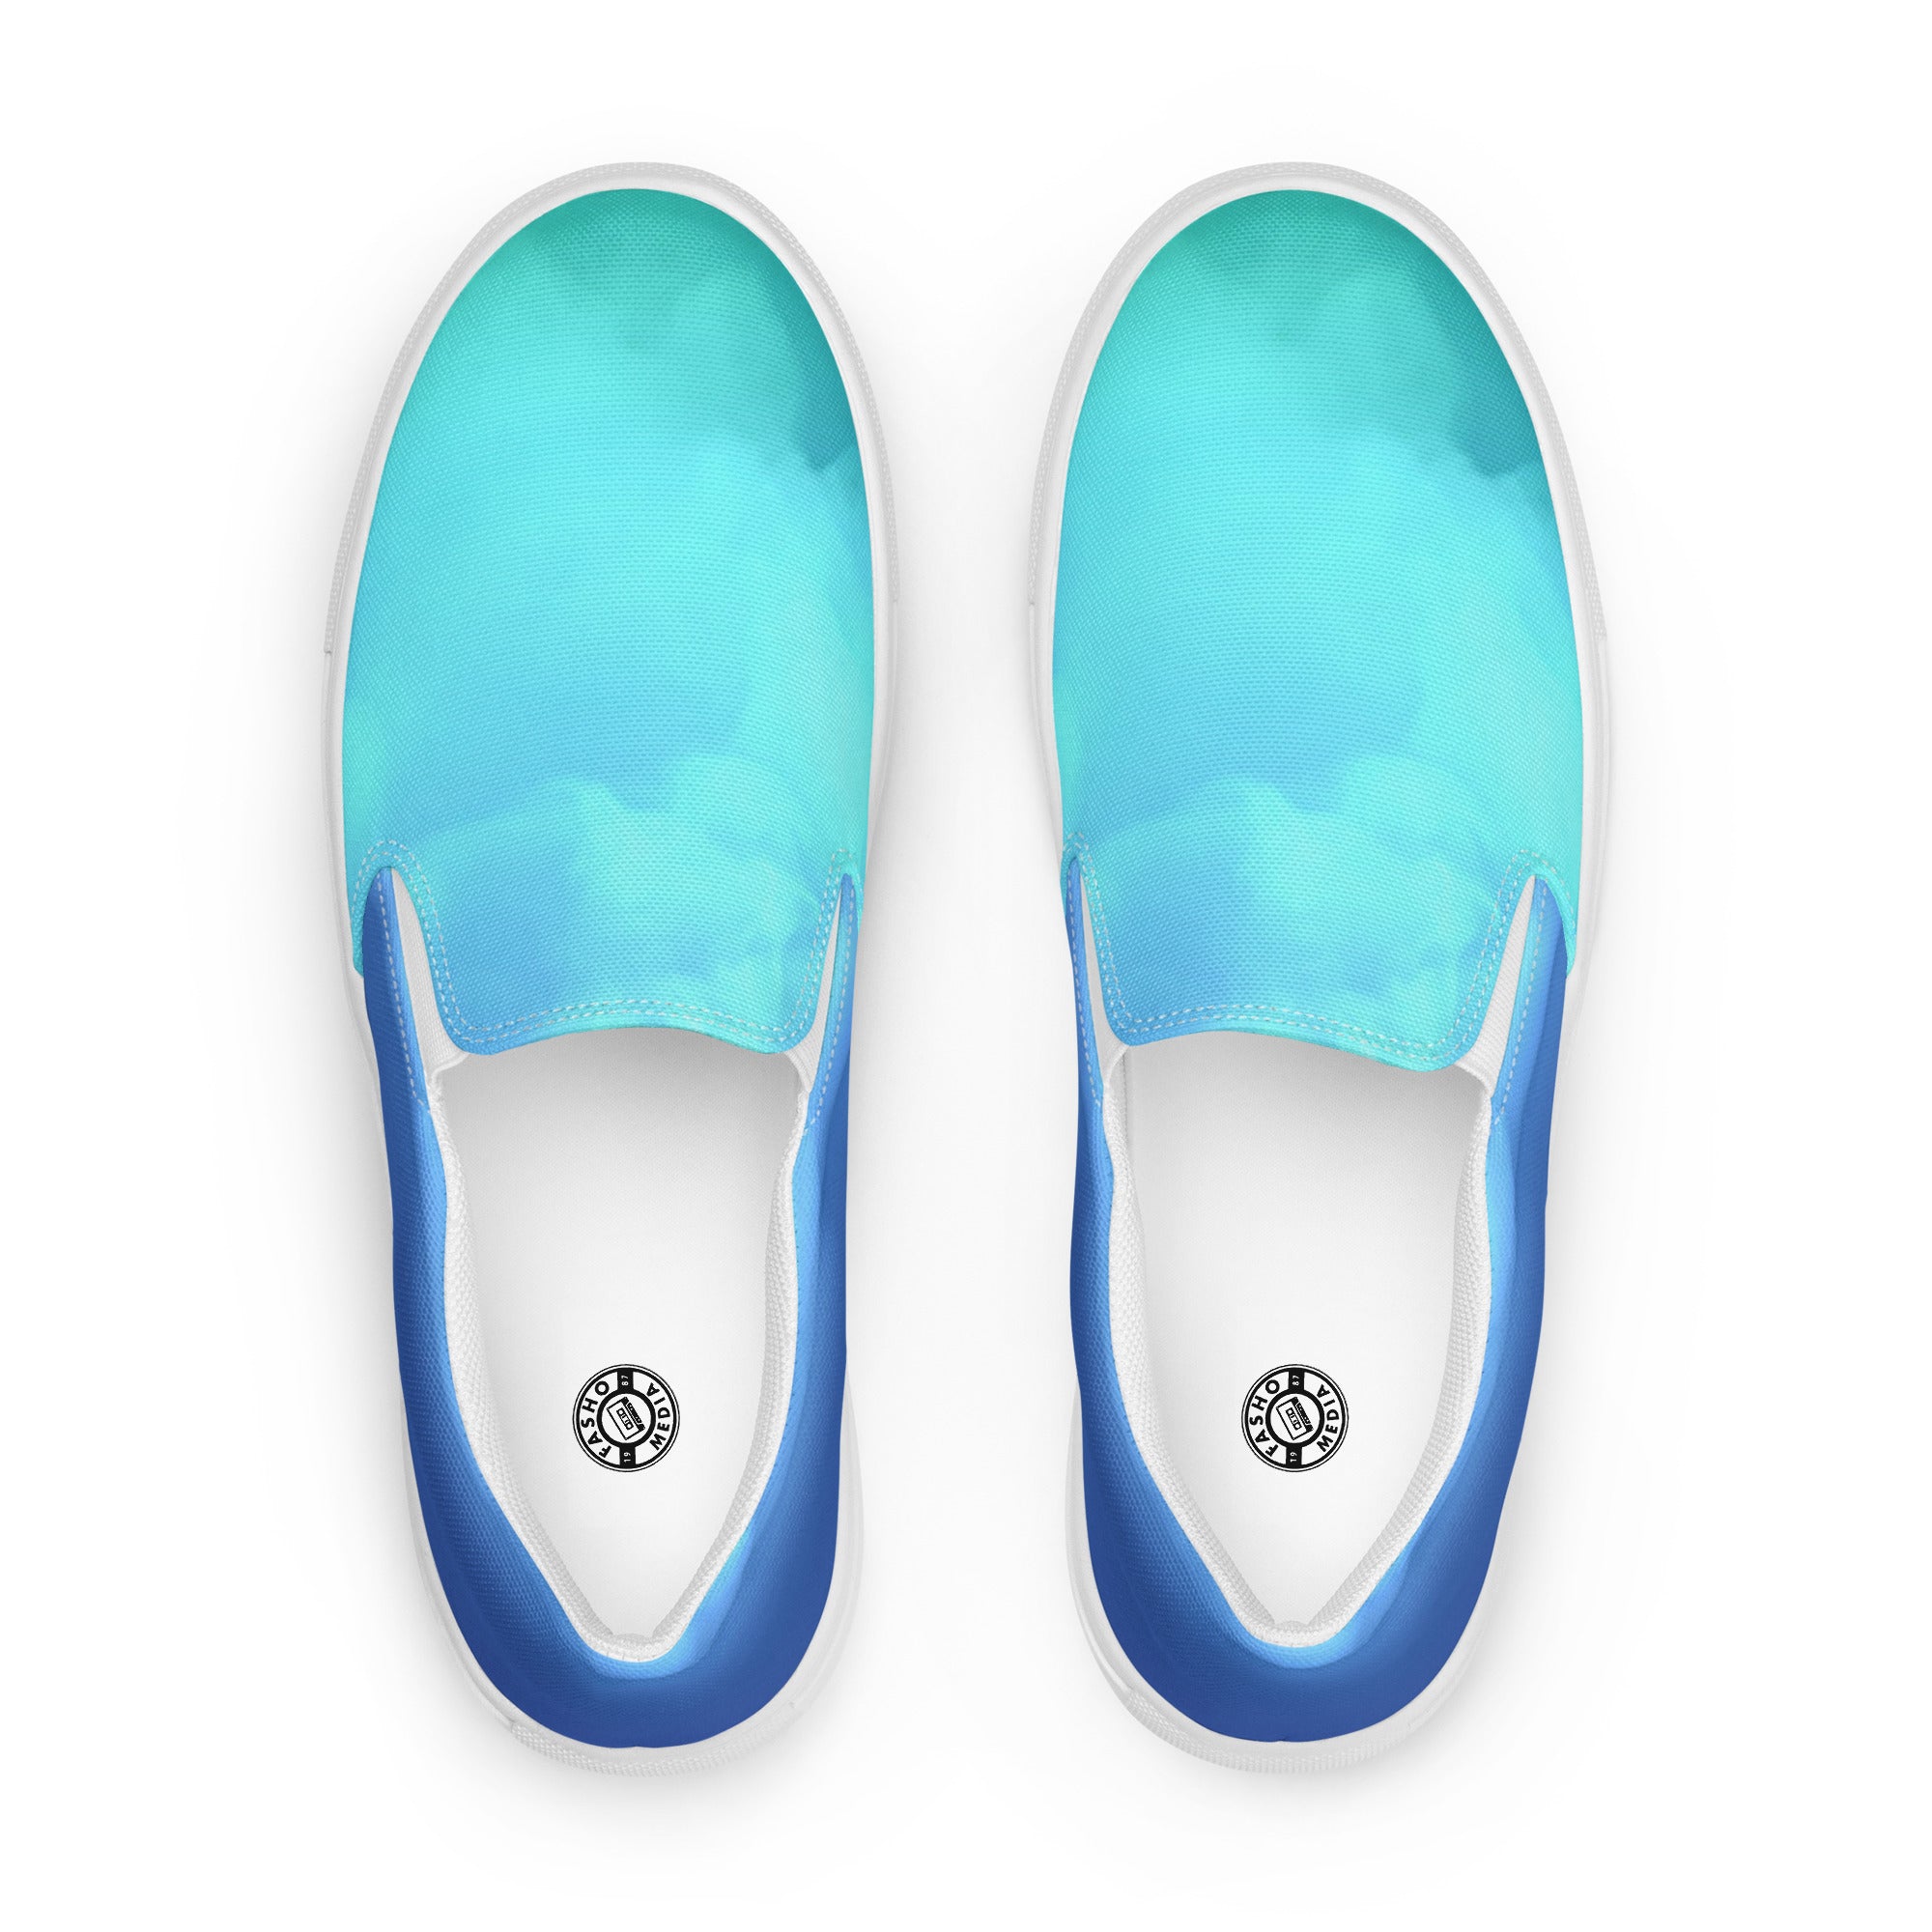 Aqua Haze Men’s slip-on canvas shoes